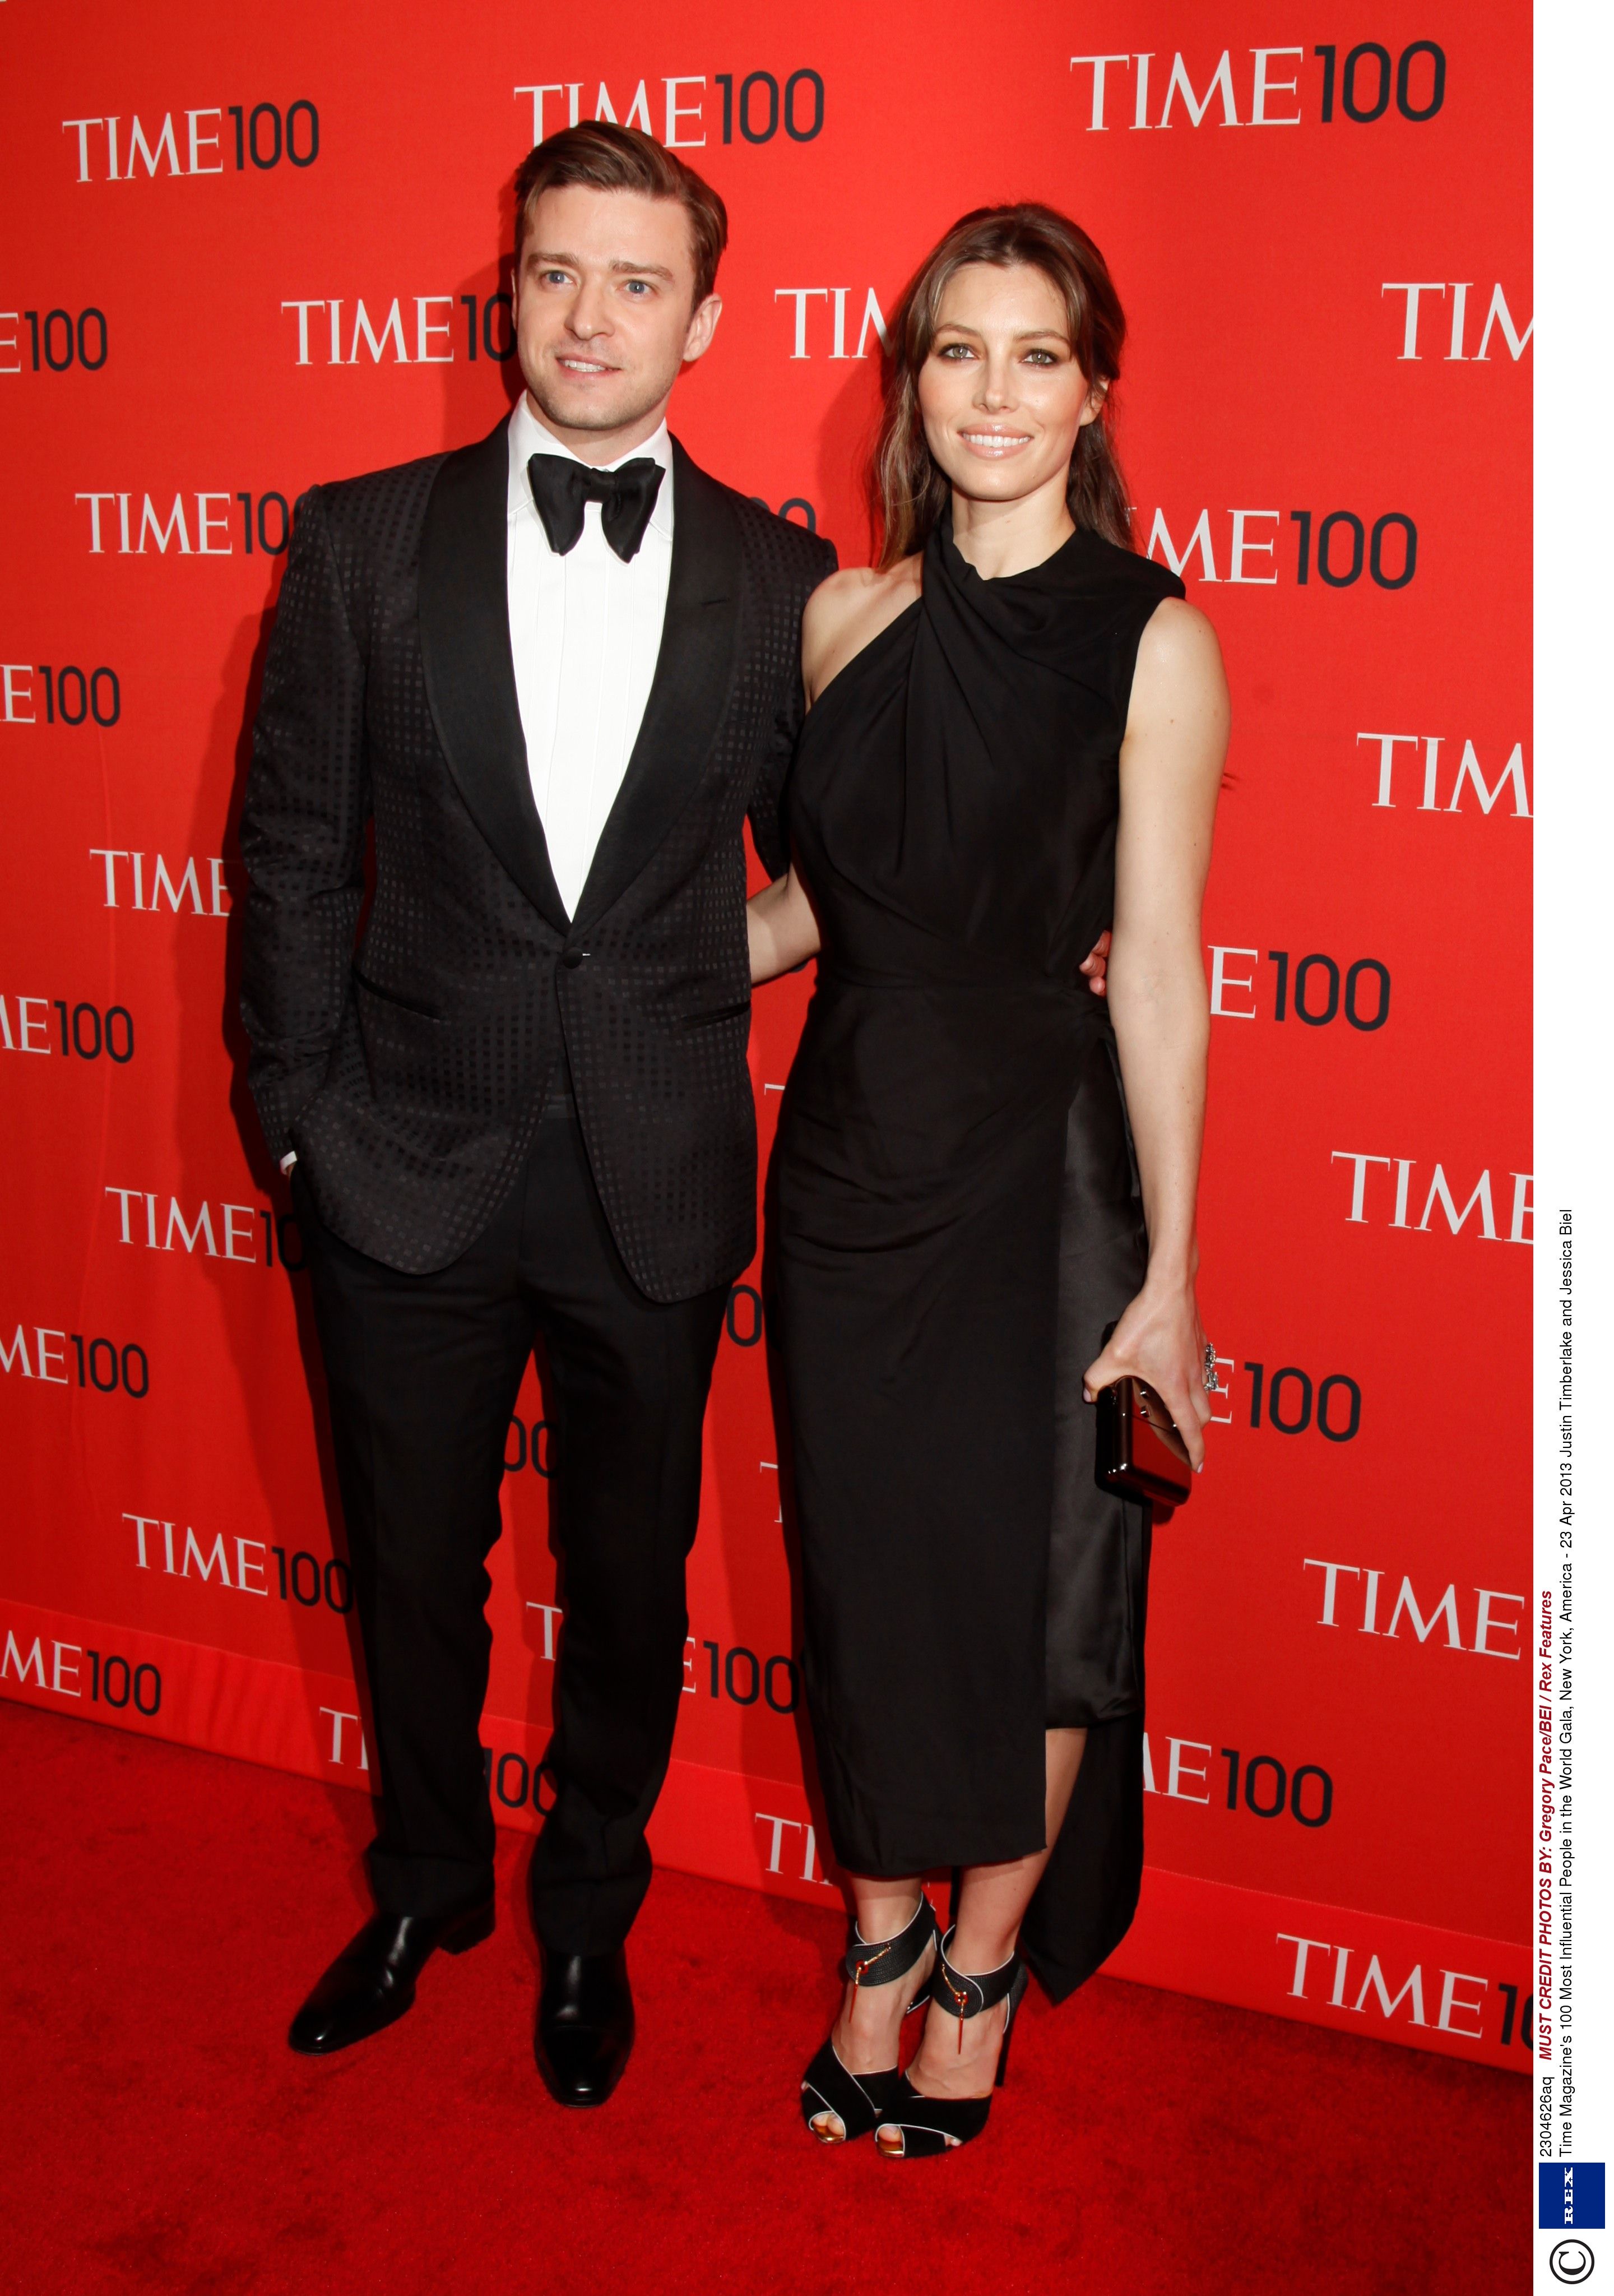 Look: Justin Timberlake, Jessica Biel step out at charity gala 